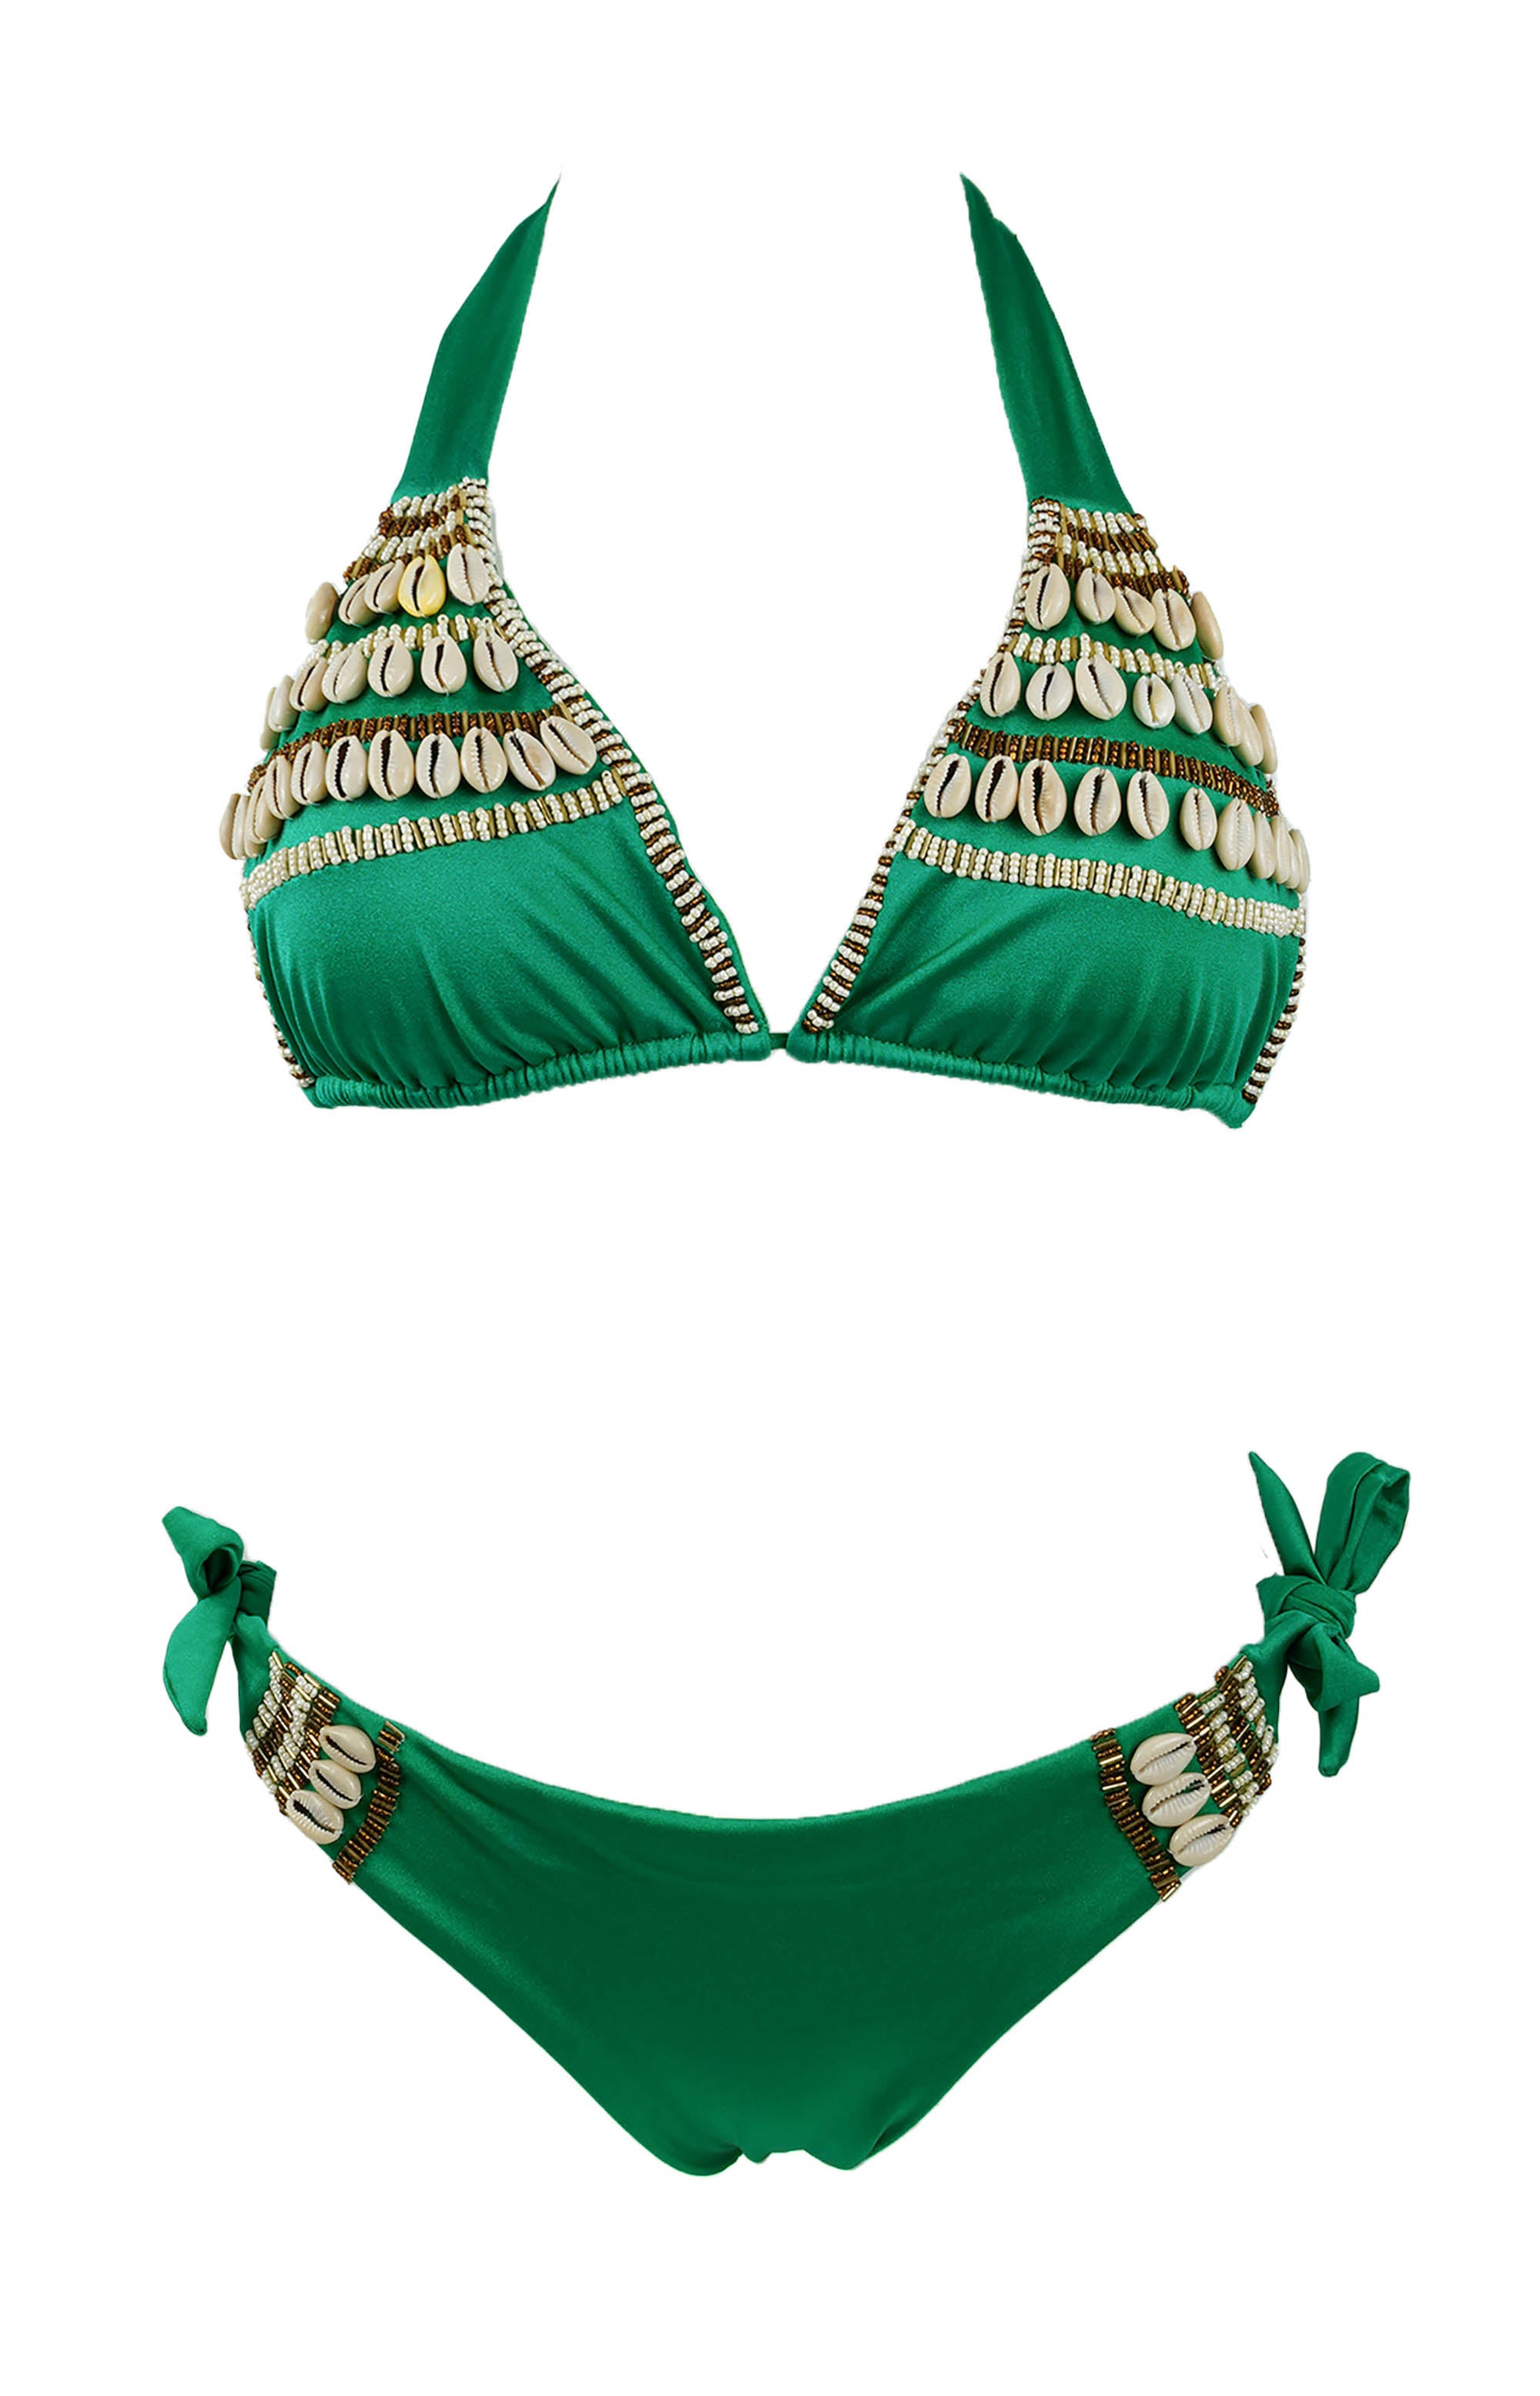 Green Bikini with Shells and beads decorated